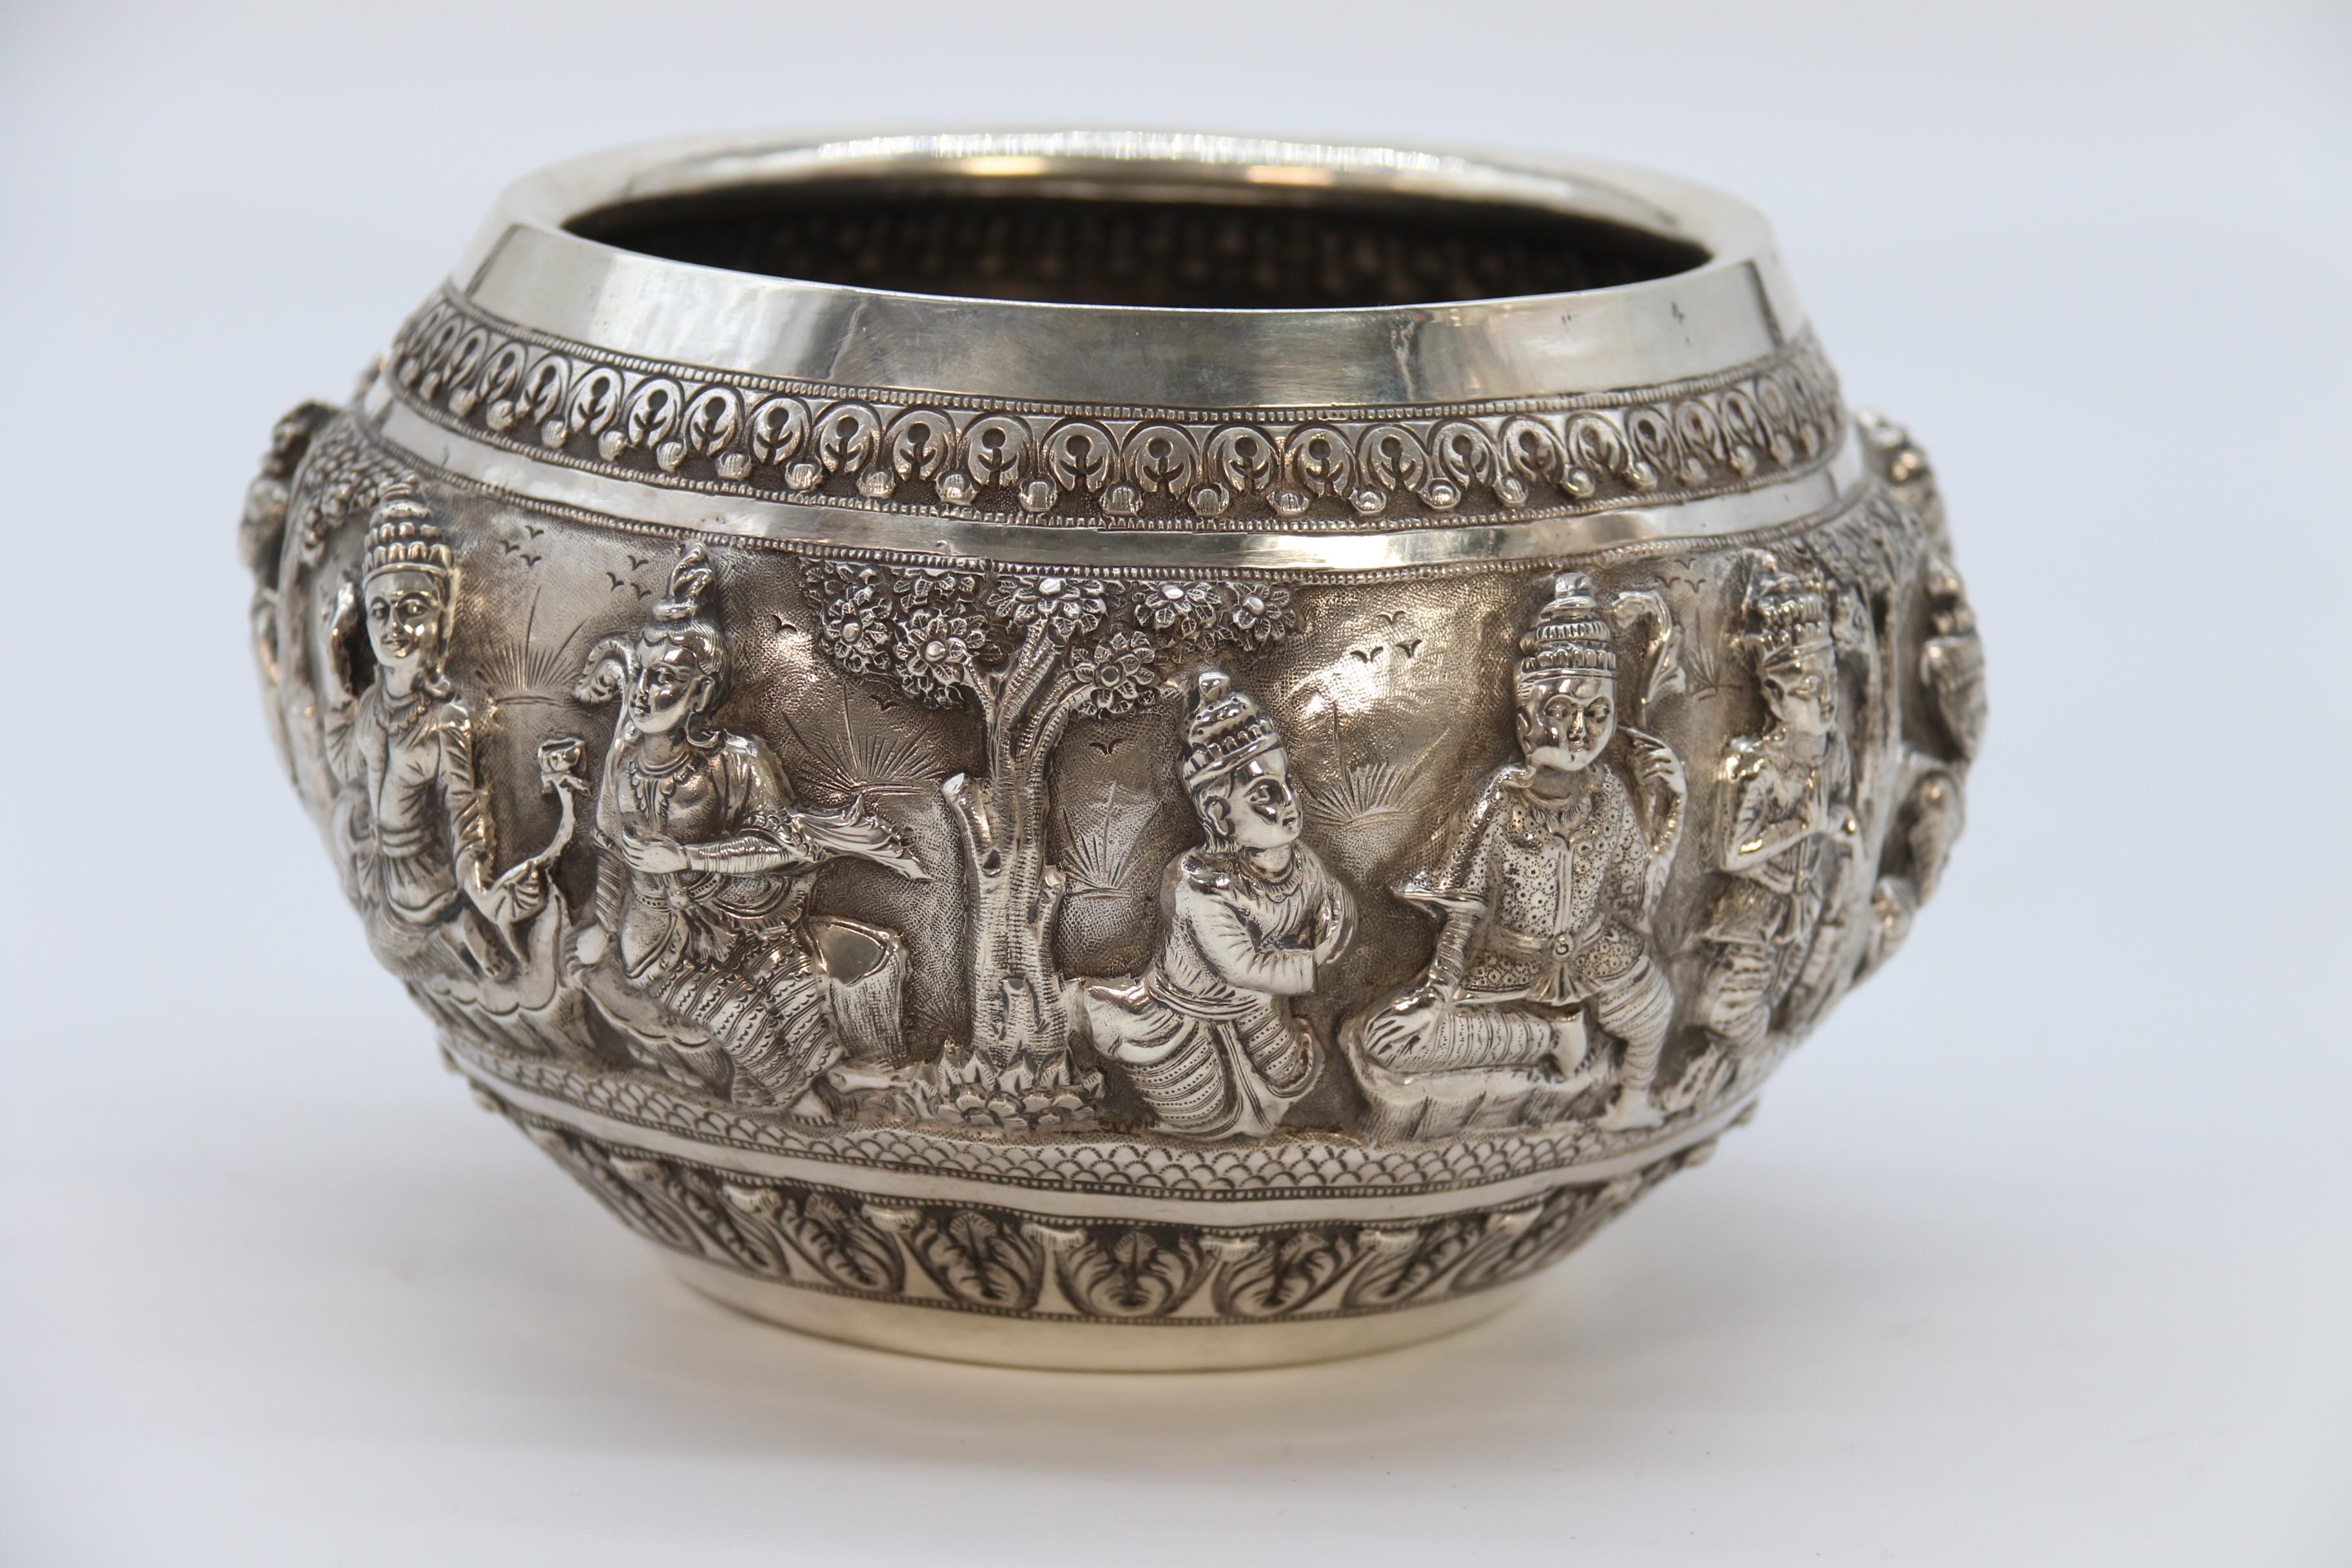 Repoussé 19th century Indian silver Raj period deep relief repousse work bowl circa 1870 For Sale